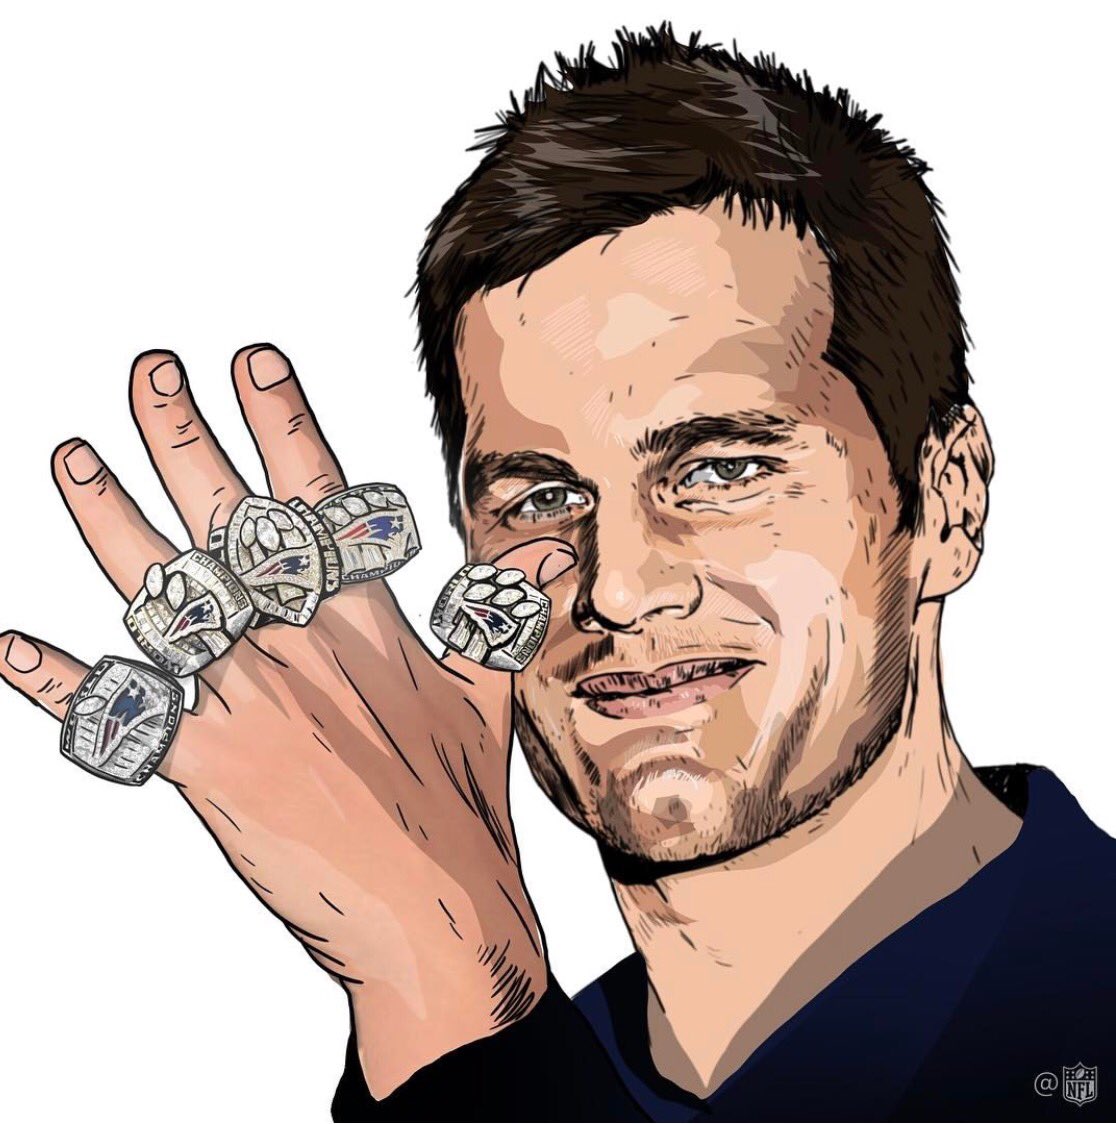 KekNewsNetwork \"Happy 40th birthday to the greatest quarterback in the history of NFL 

Tom Brady 